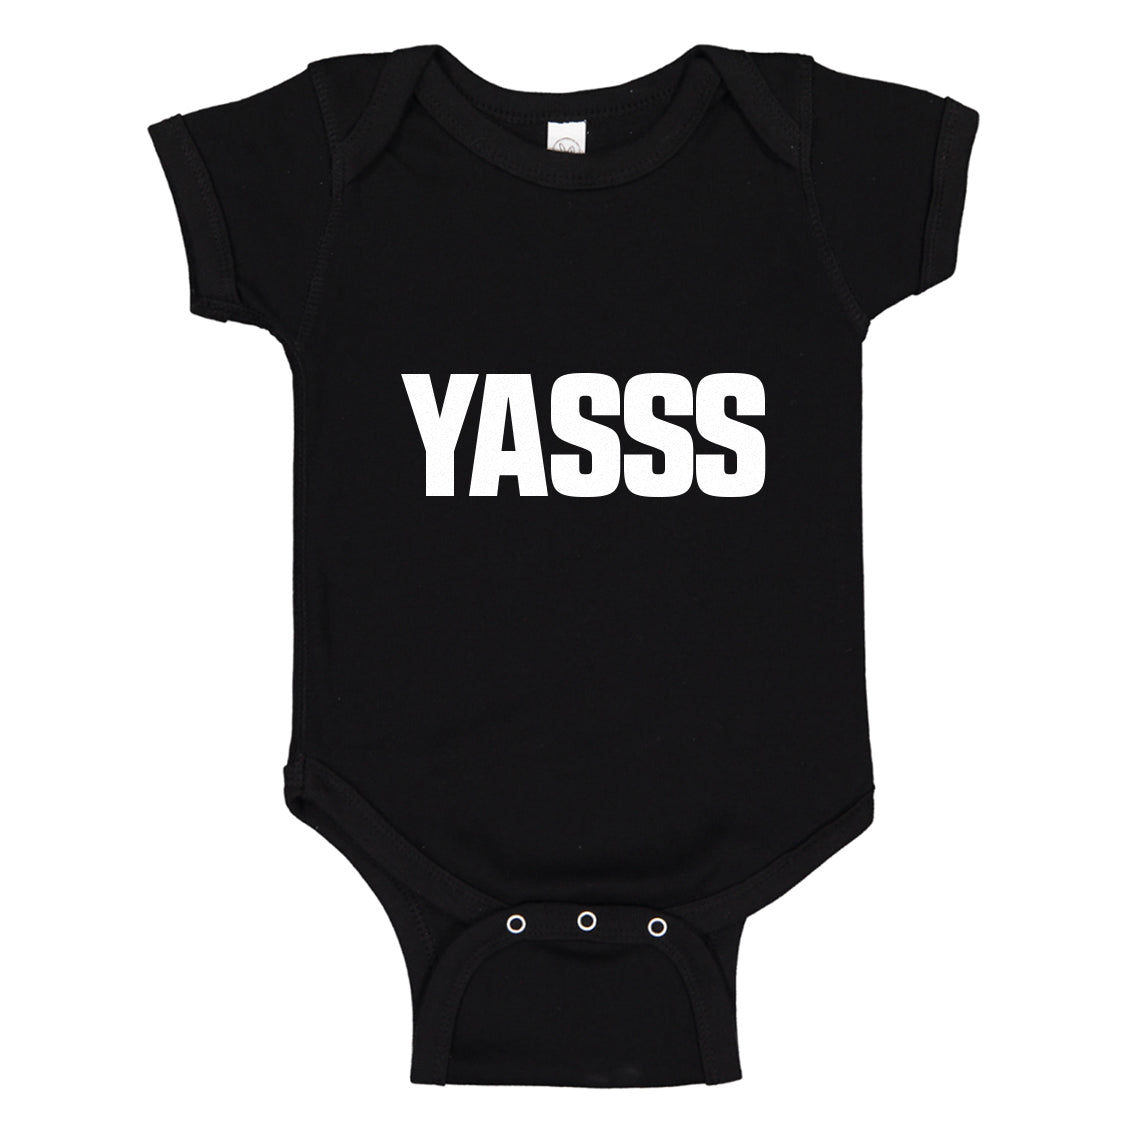 Baby Onesie Yasss 100% Cotton Infant Bodysuit